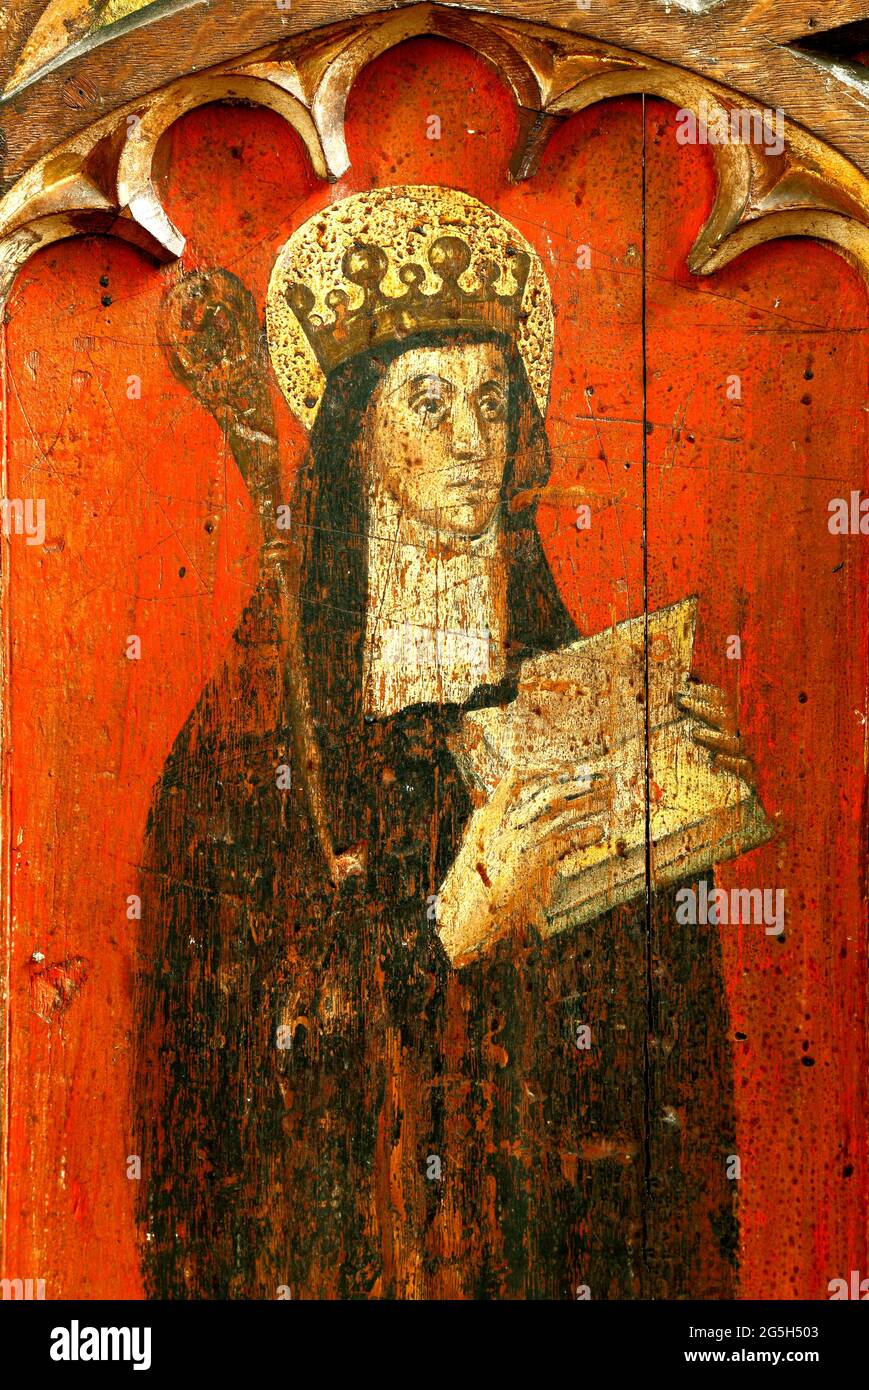 St. Etheldreda, Rood Screen Painting, c.1500, North Tuddenham, Norfolk. Heilige, Äbtissin, Königin von East Anglia, England, Großbritannien Stockfoto